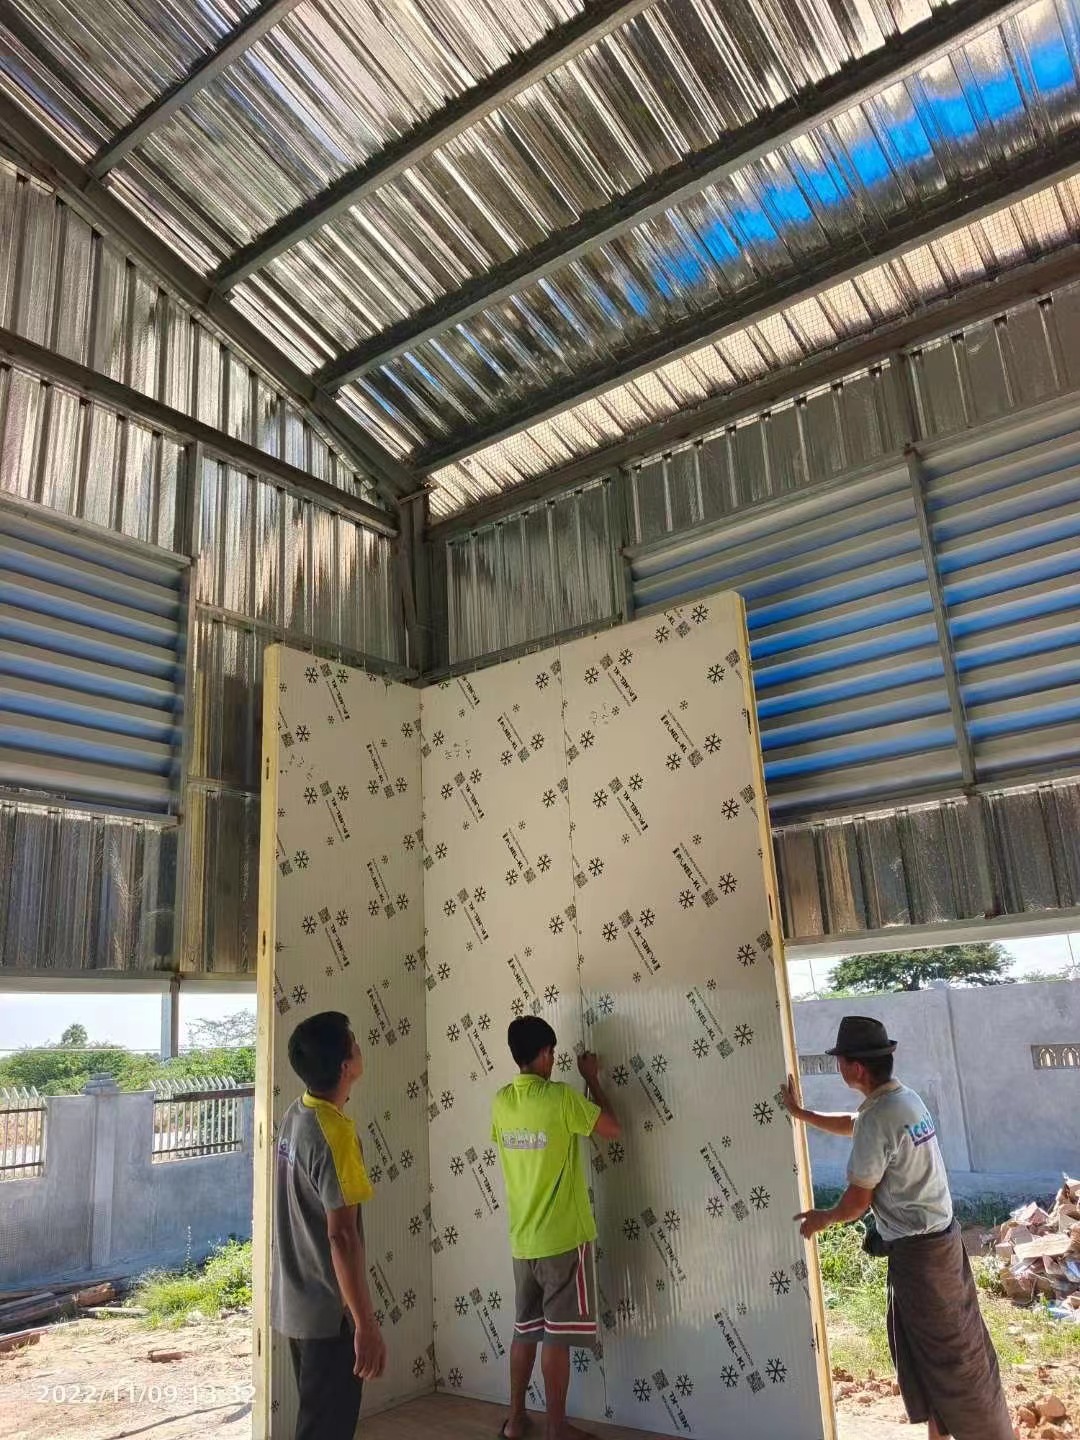 Cold storage under construction in Myanmar